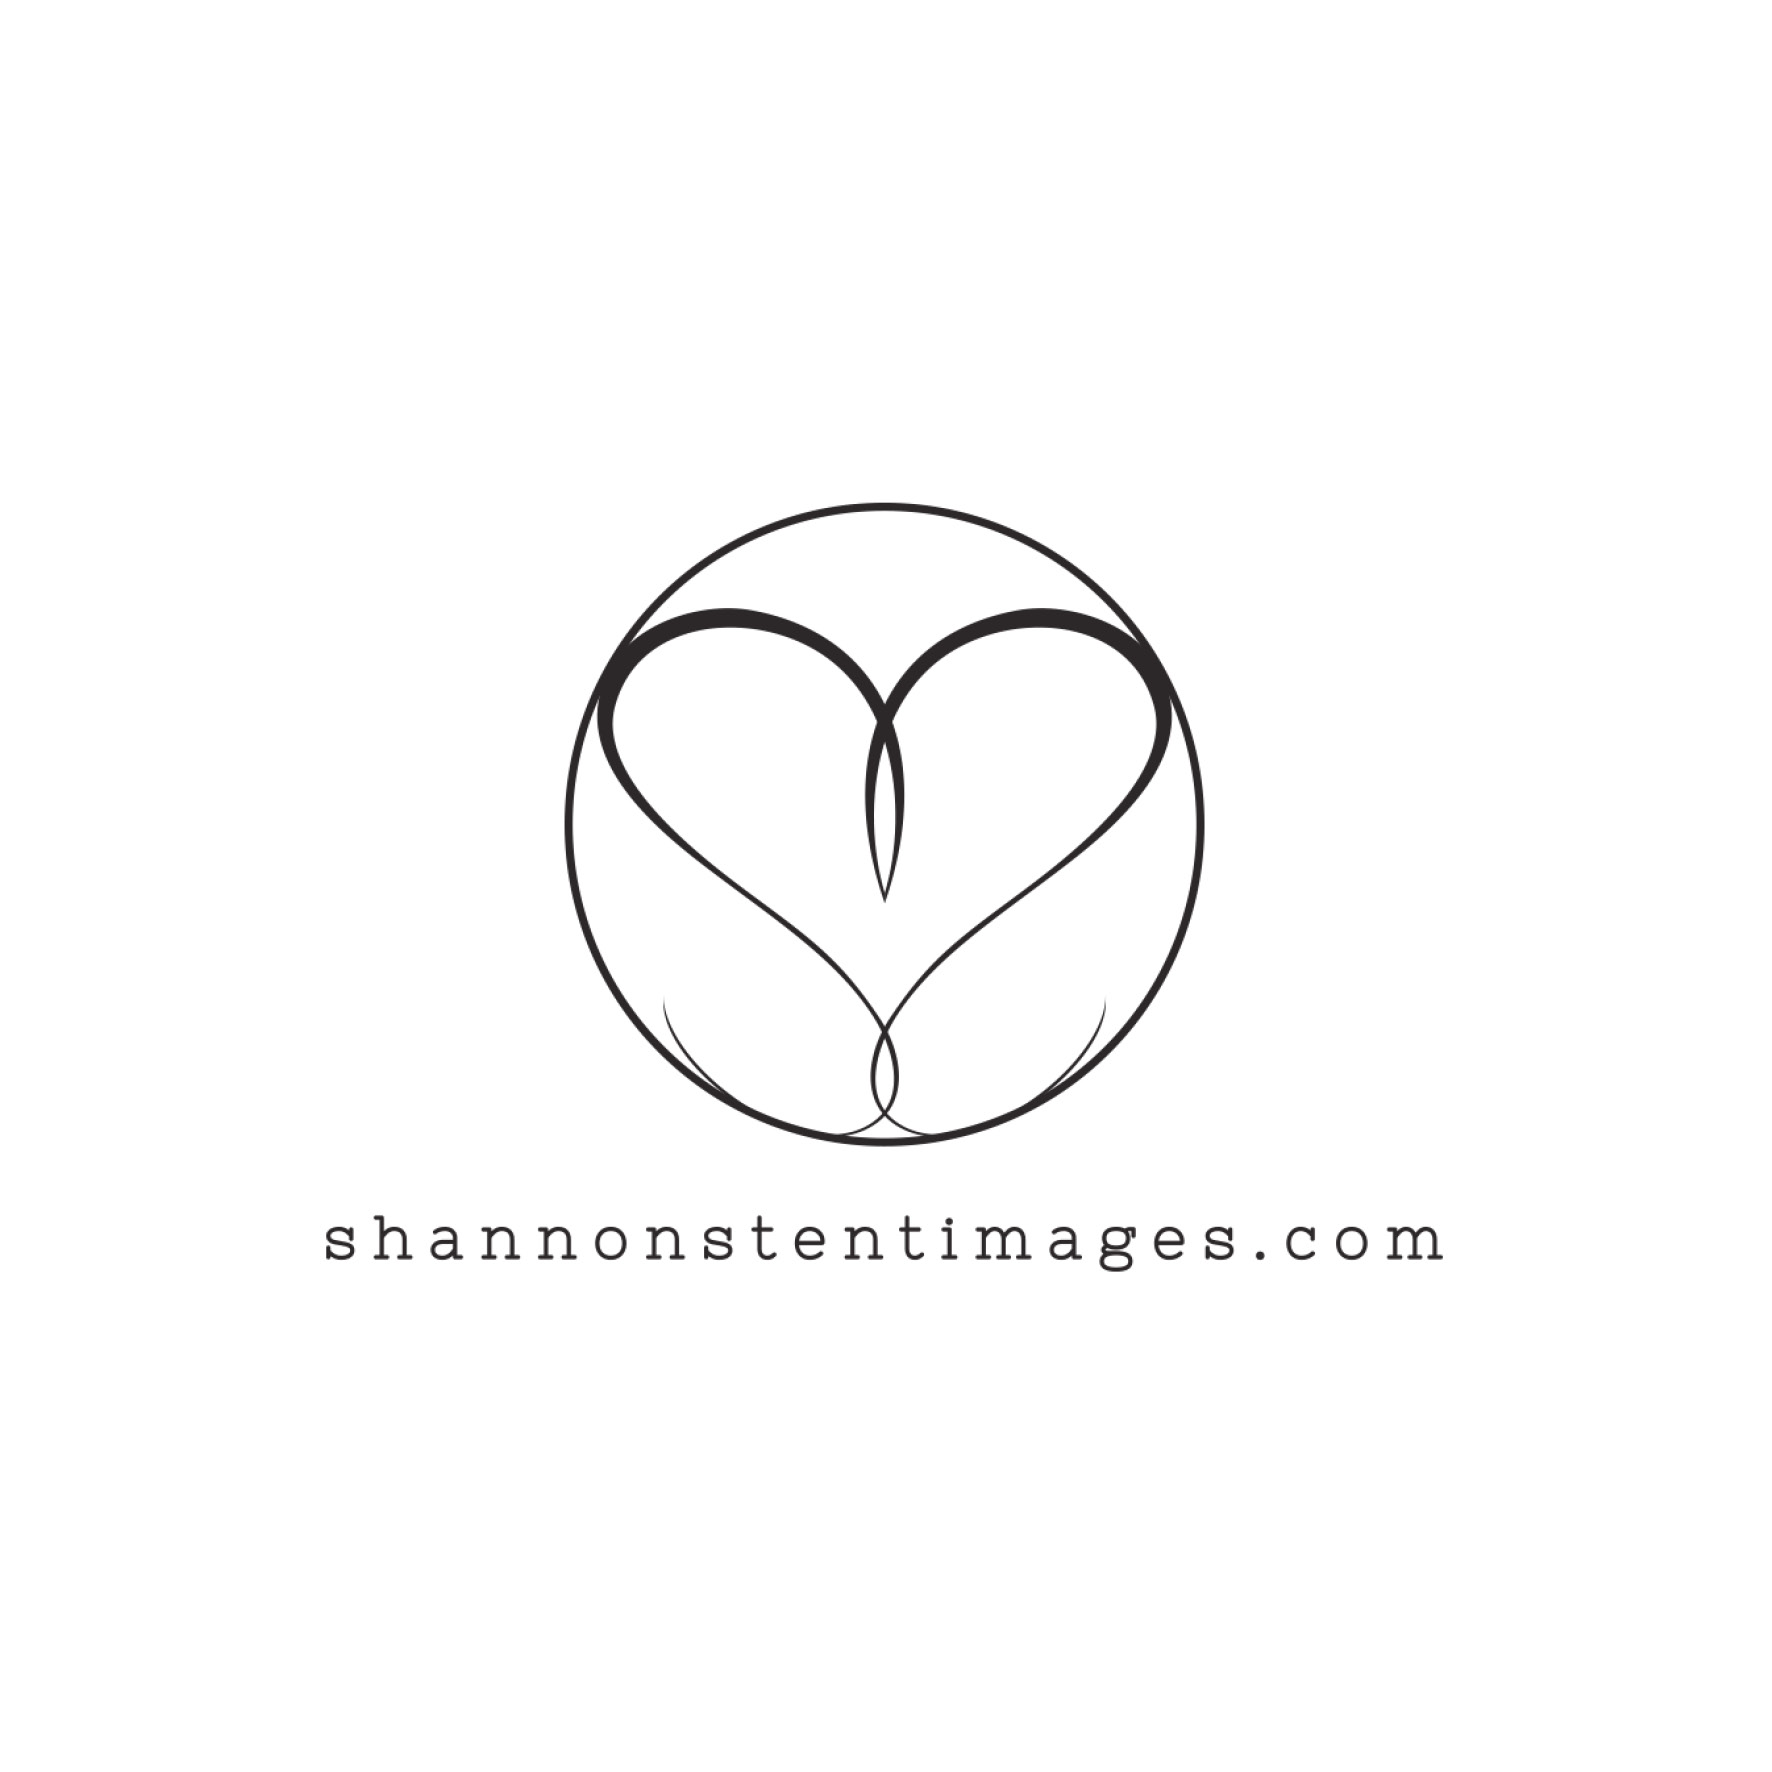 Exhibitor Logo - Shannon Stent.jpg